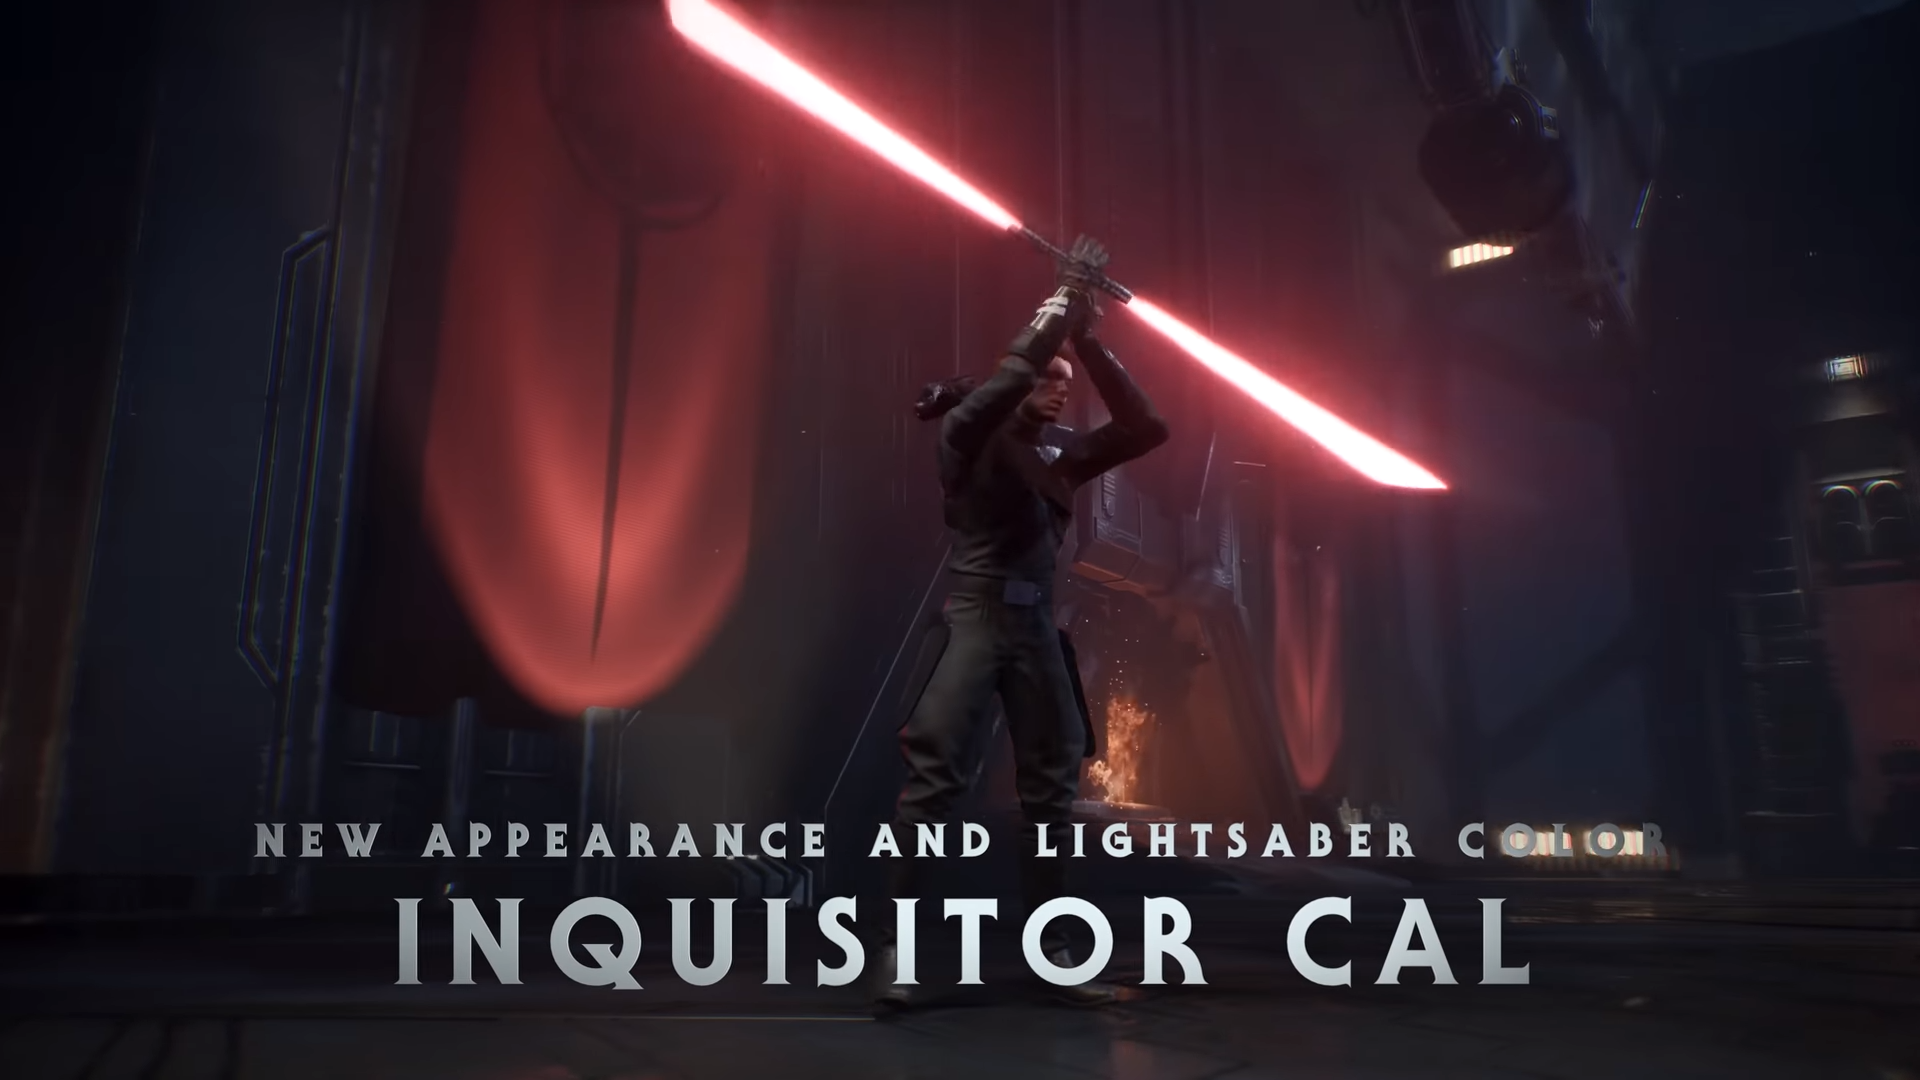 Star Wars: Jedi Fallen Order has some new modes